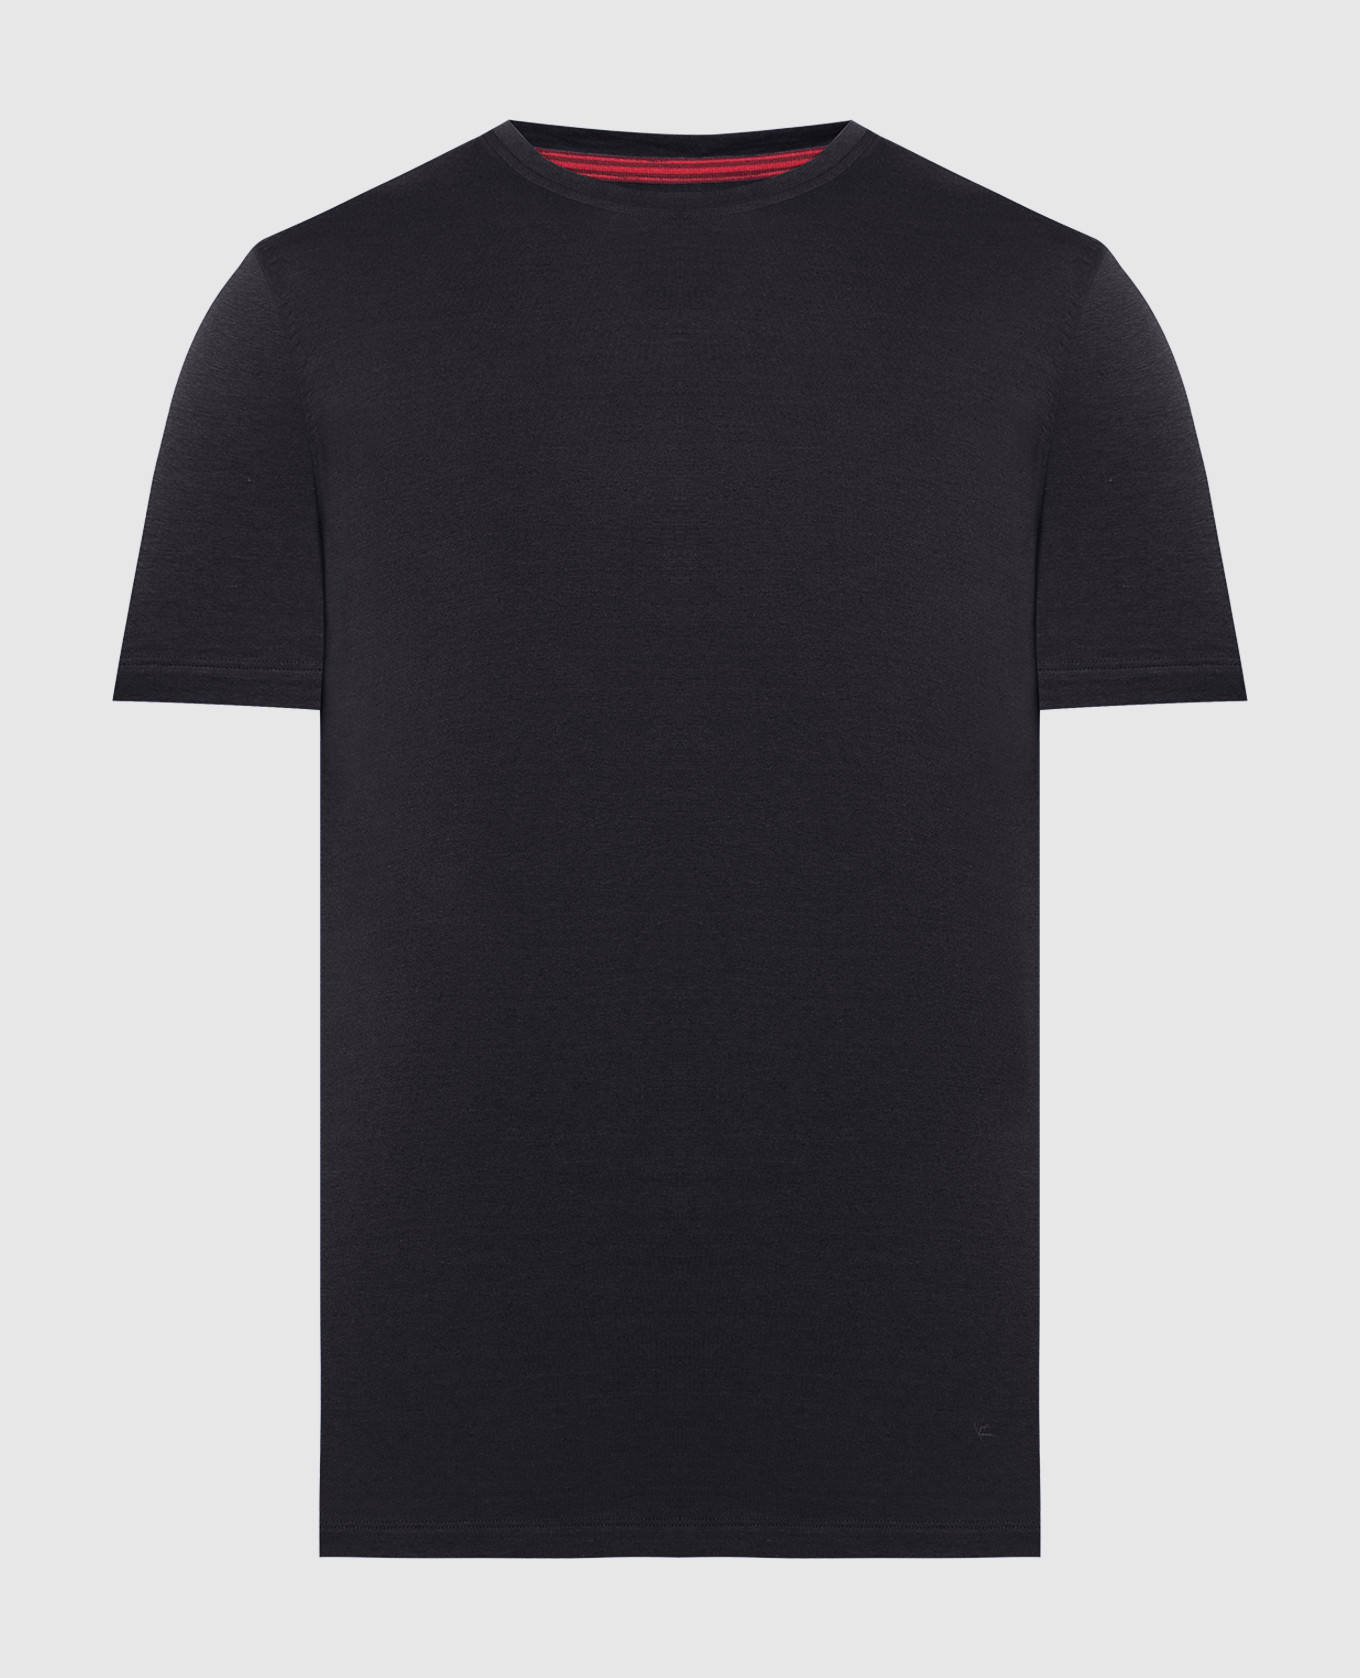 Black T-shirt made of silk